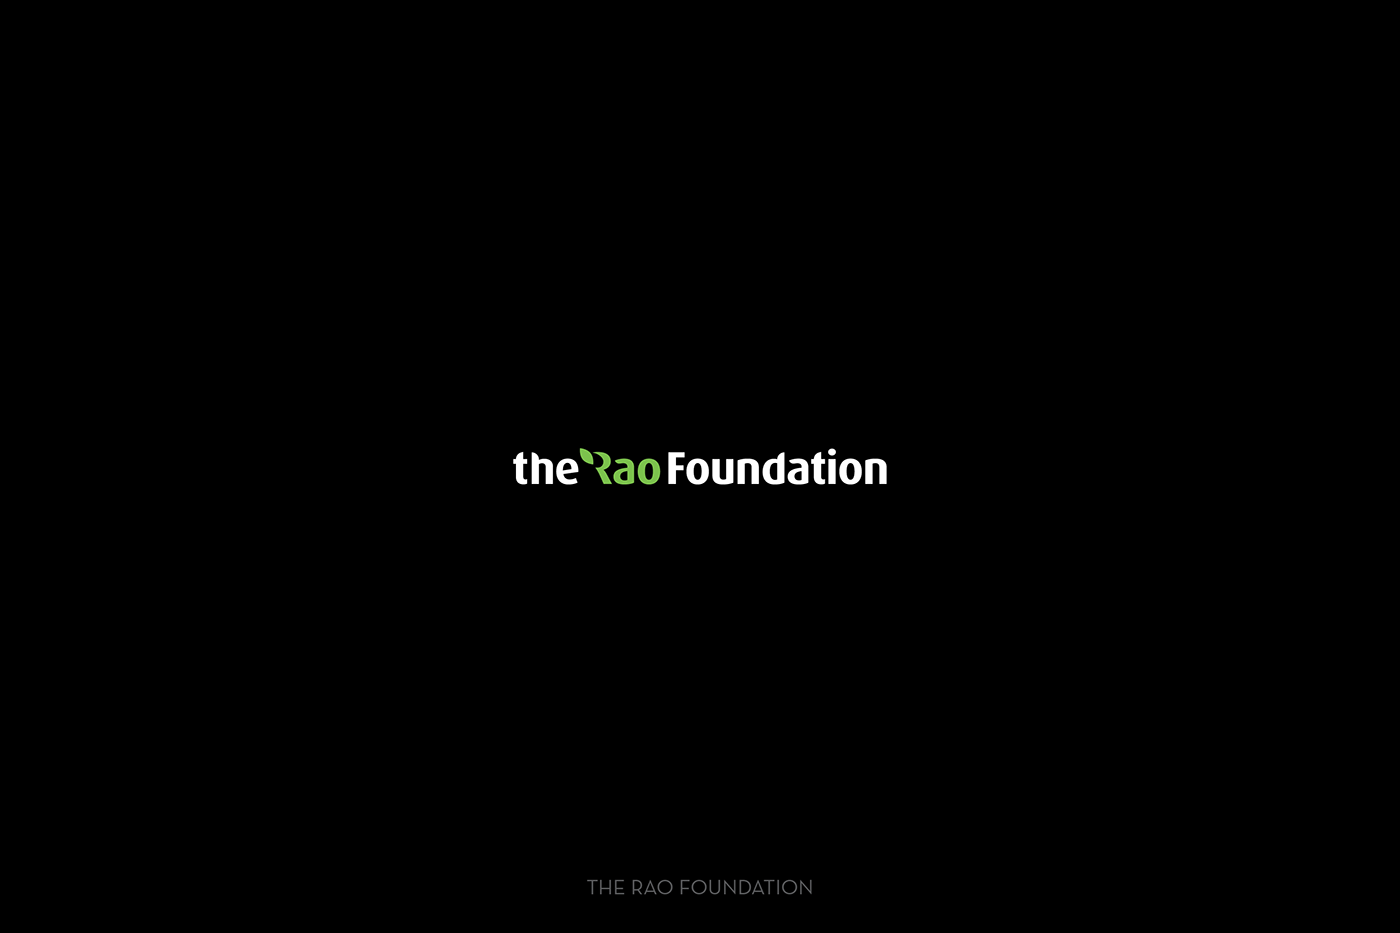 the Rao Foundation logo